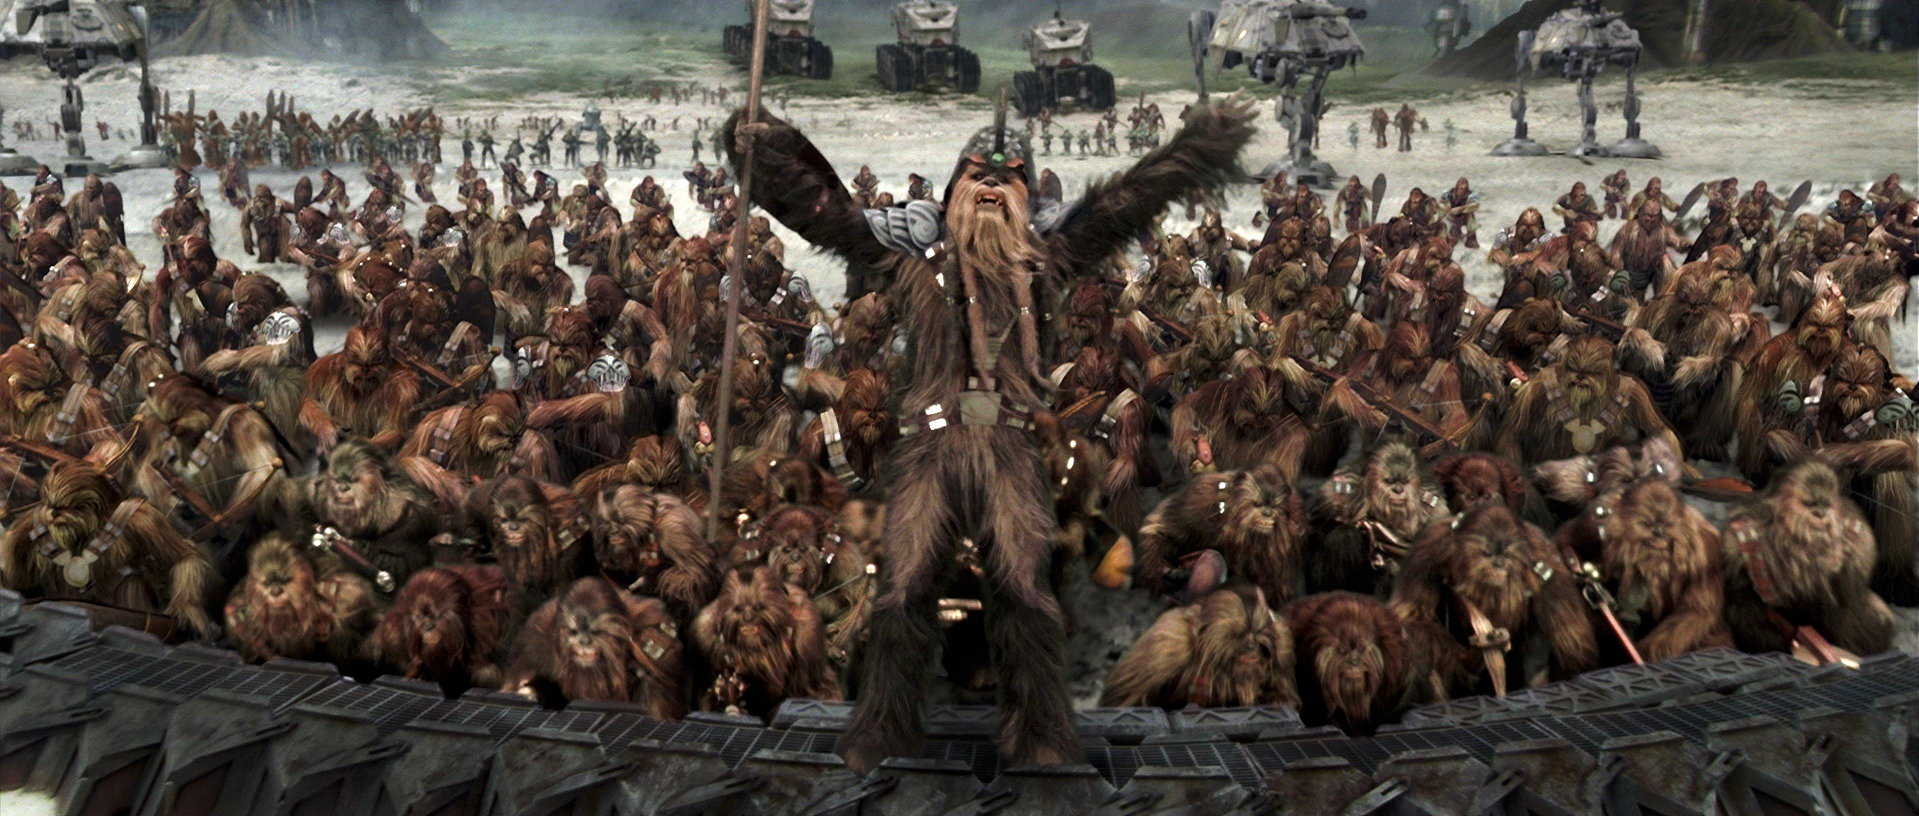 The Mandalorian Wookiee